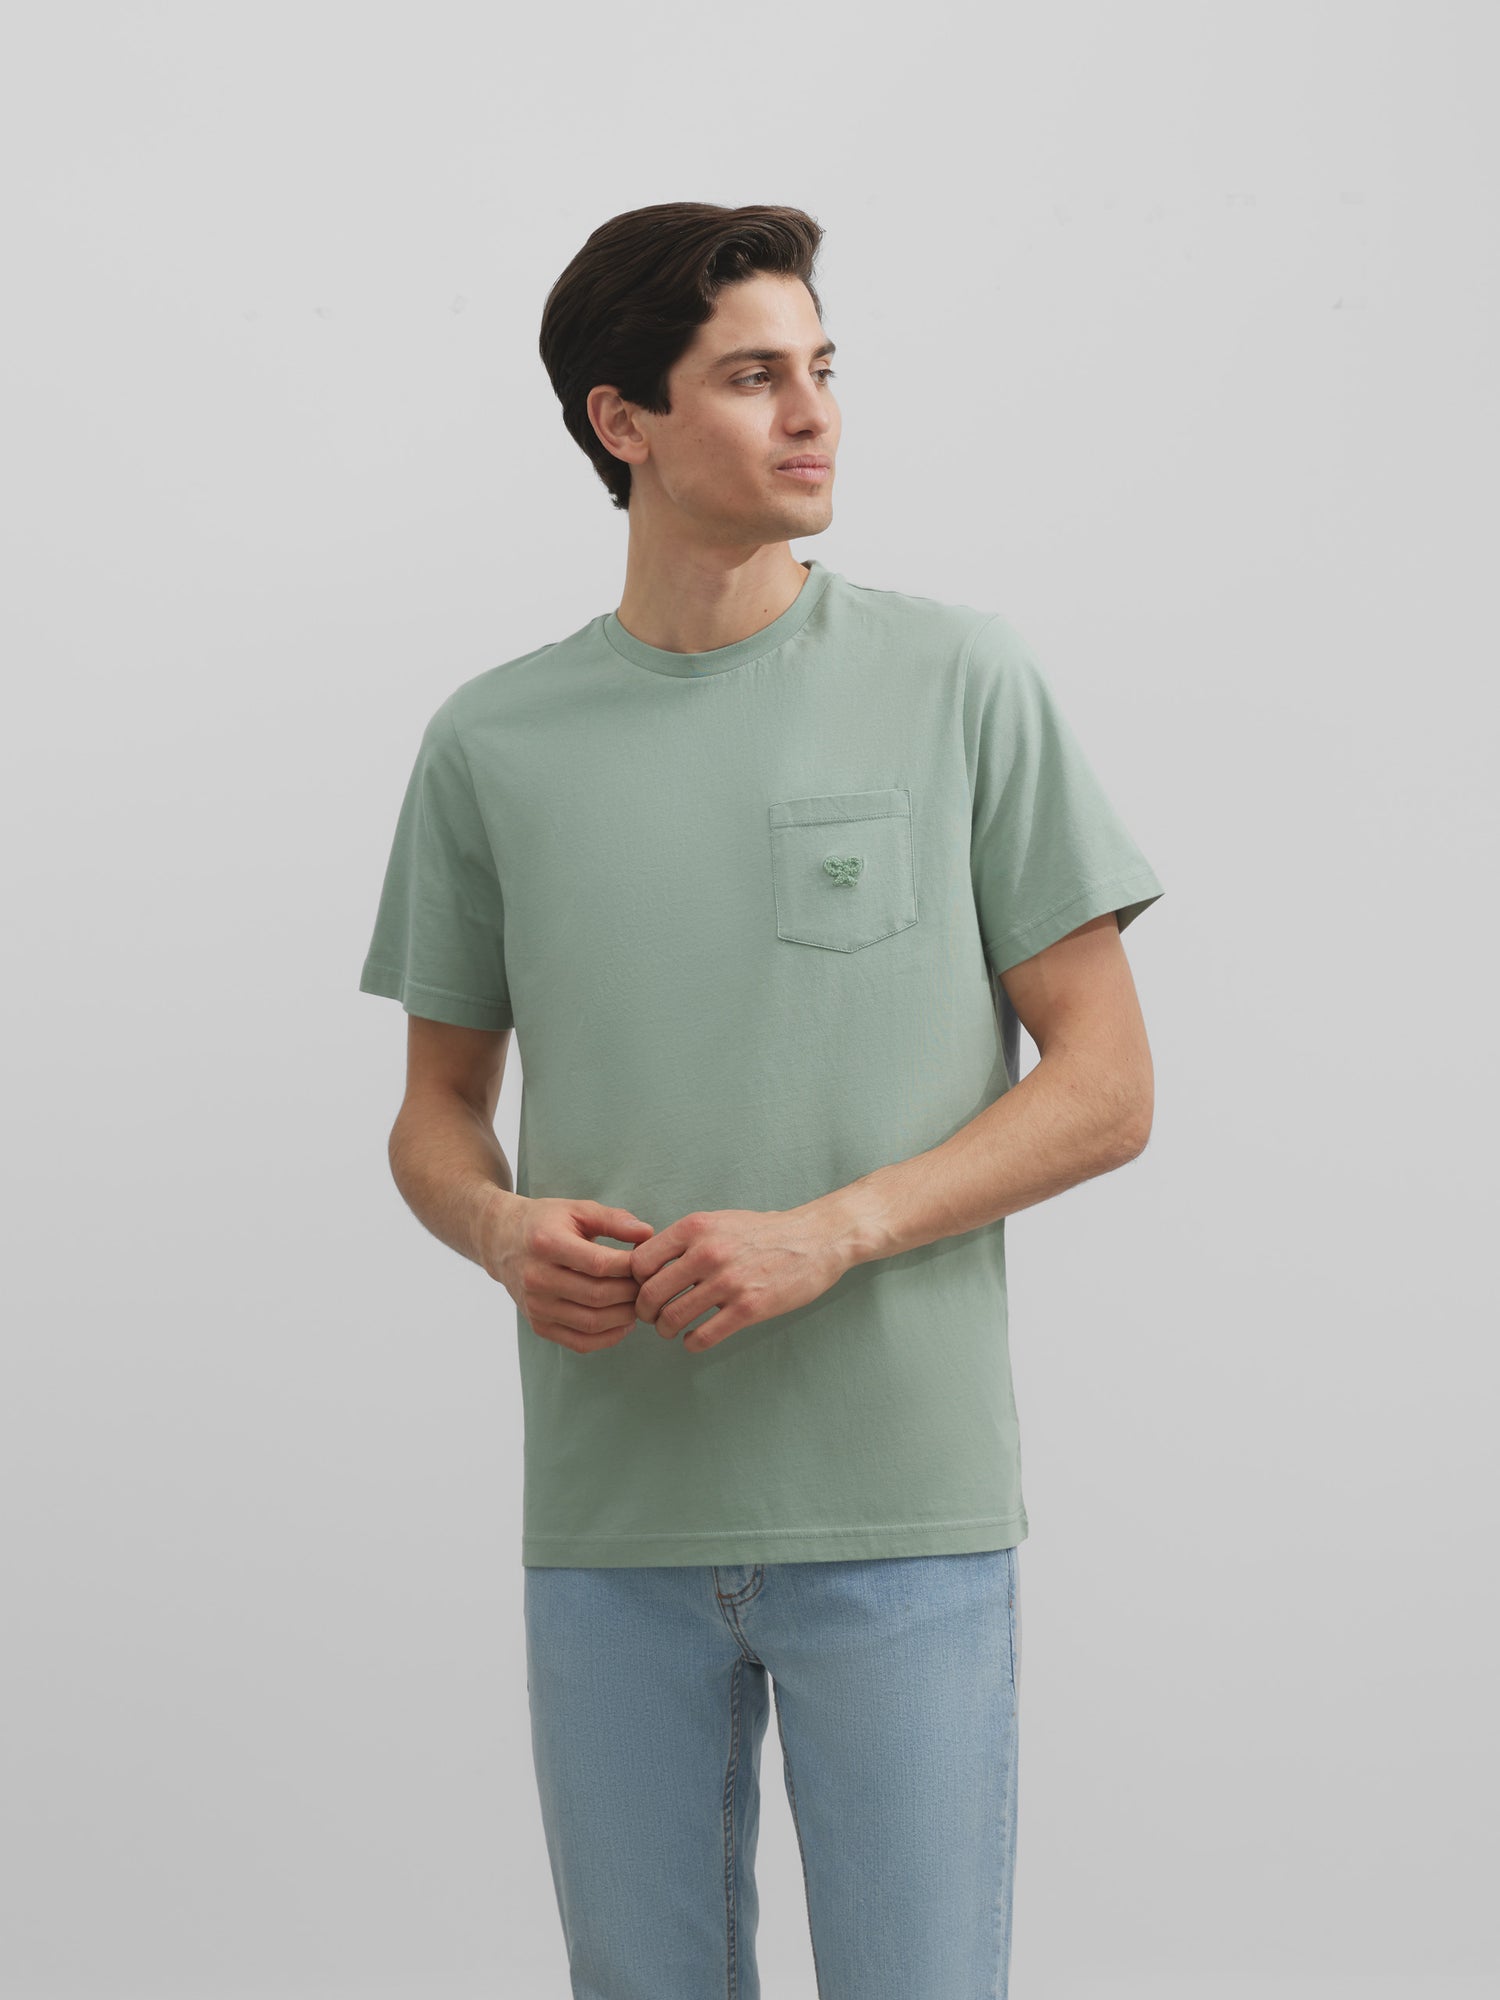 Green racket pocket t-shirt